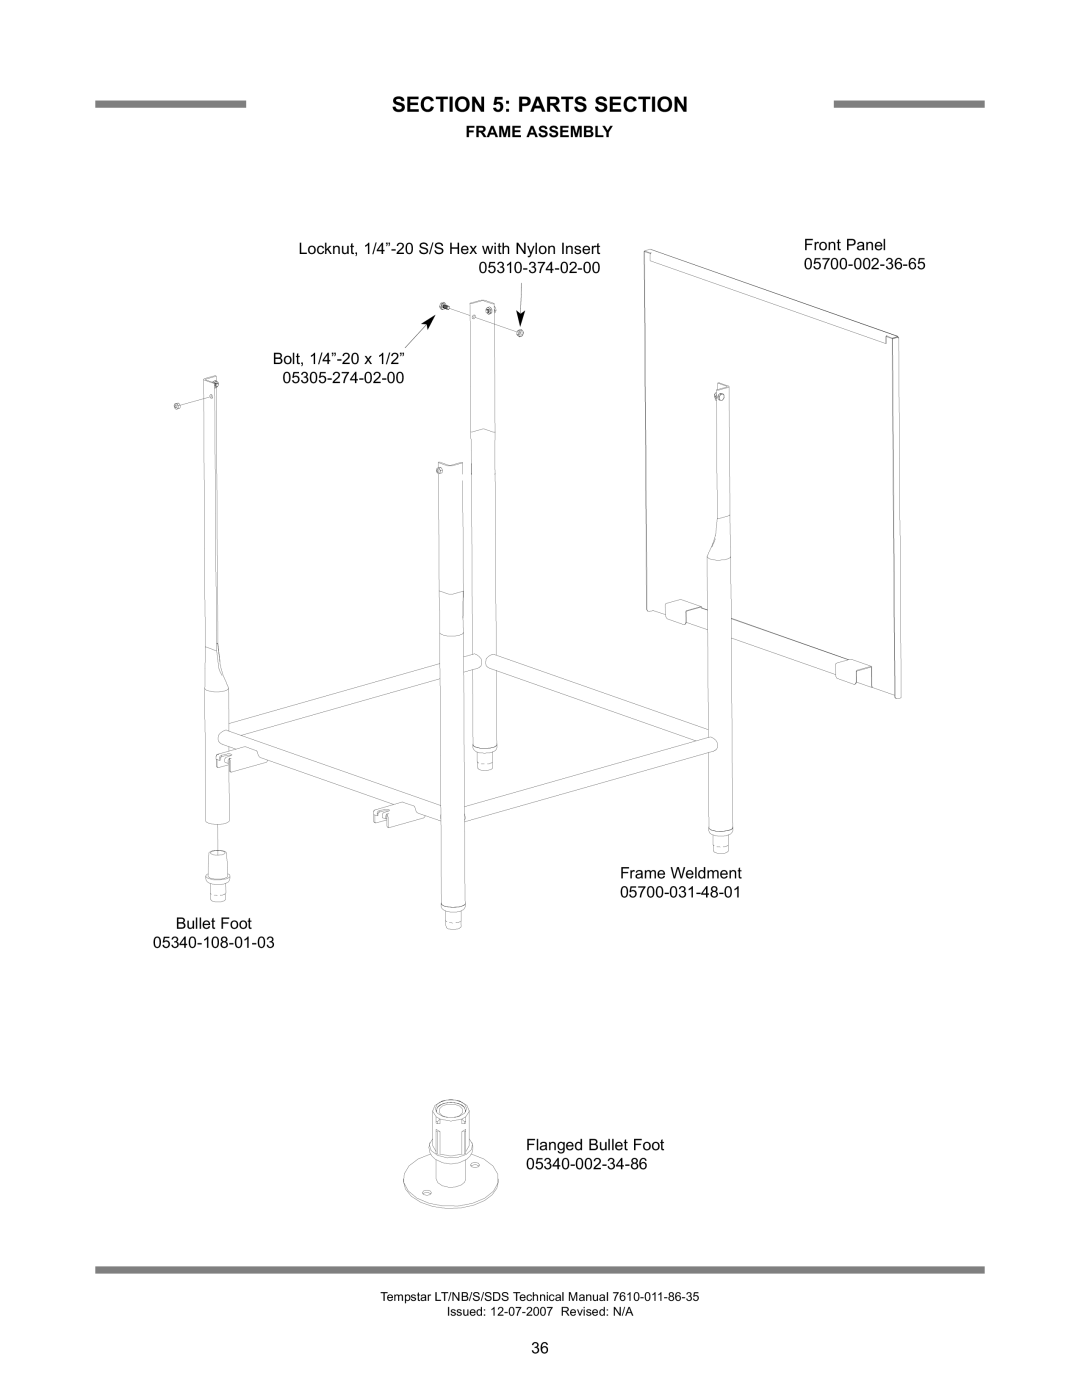 Jackson Tempstar Series technical manual Frame Assembly 